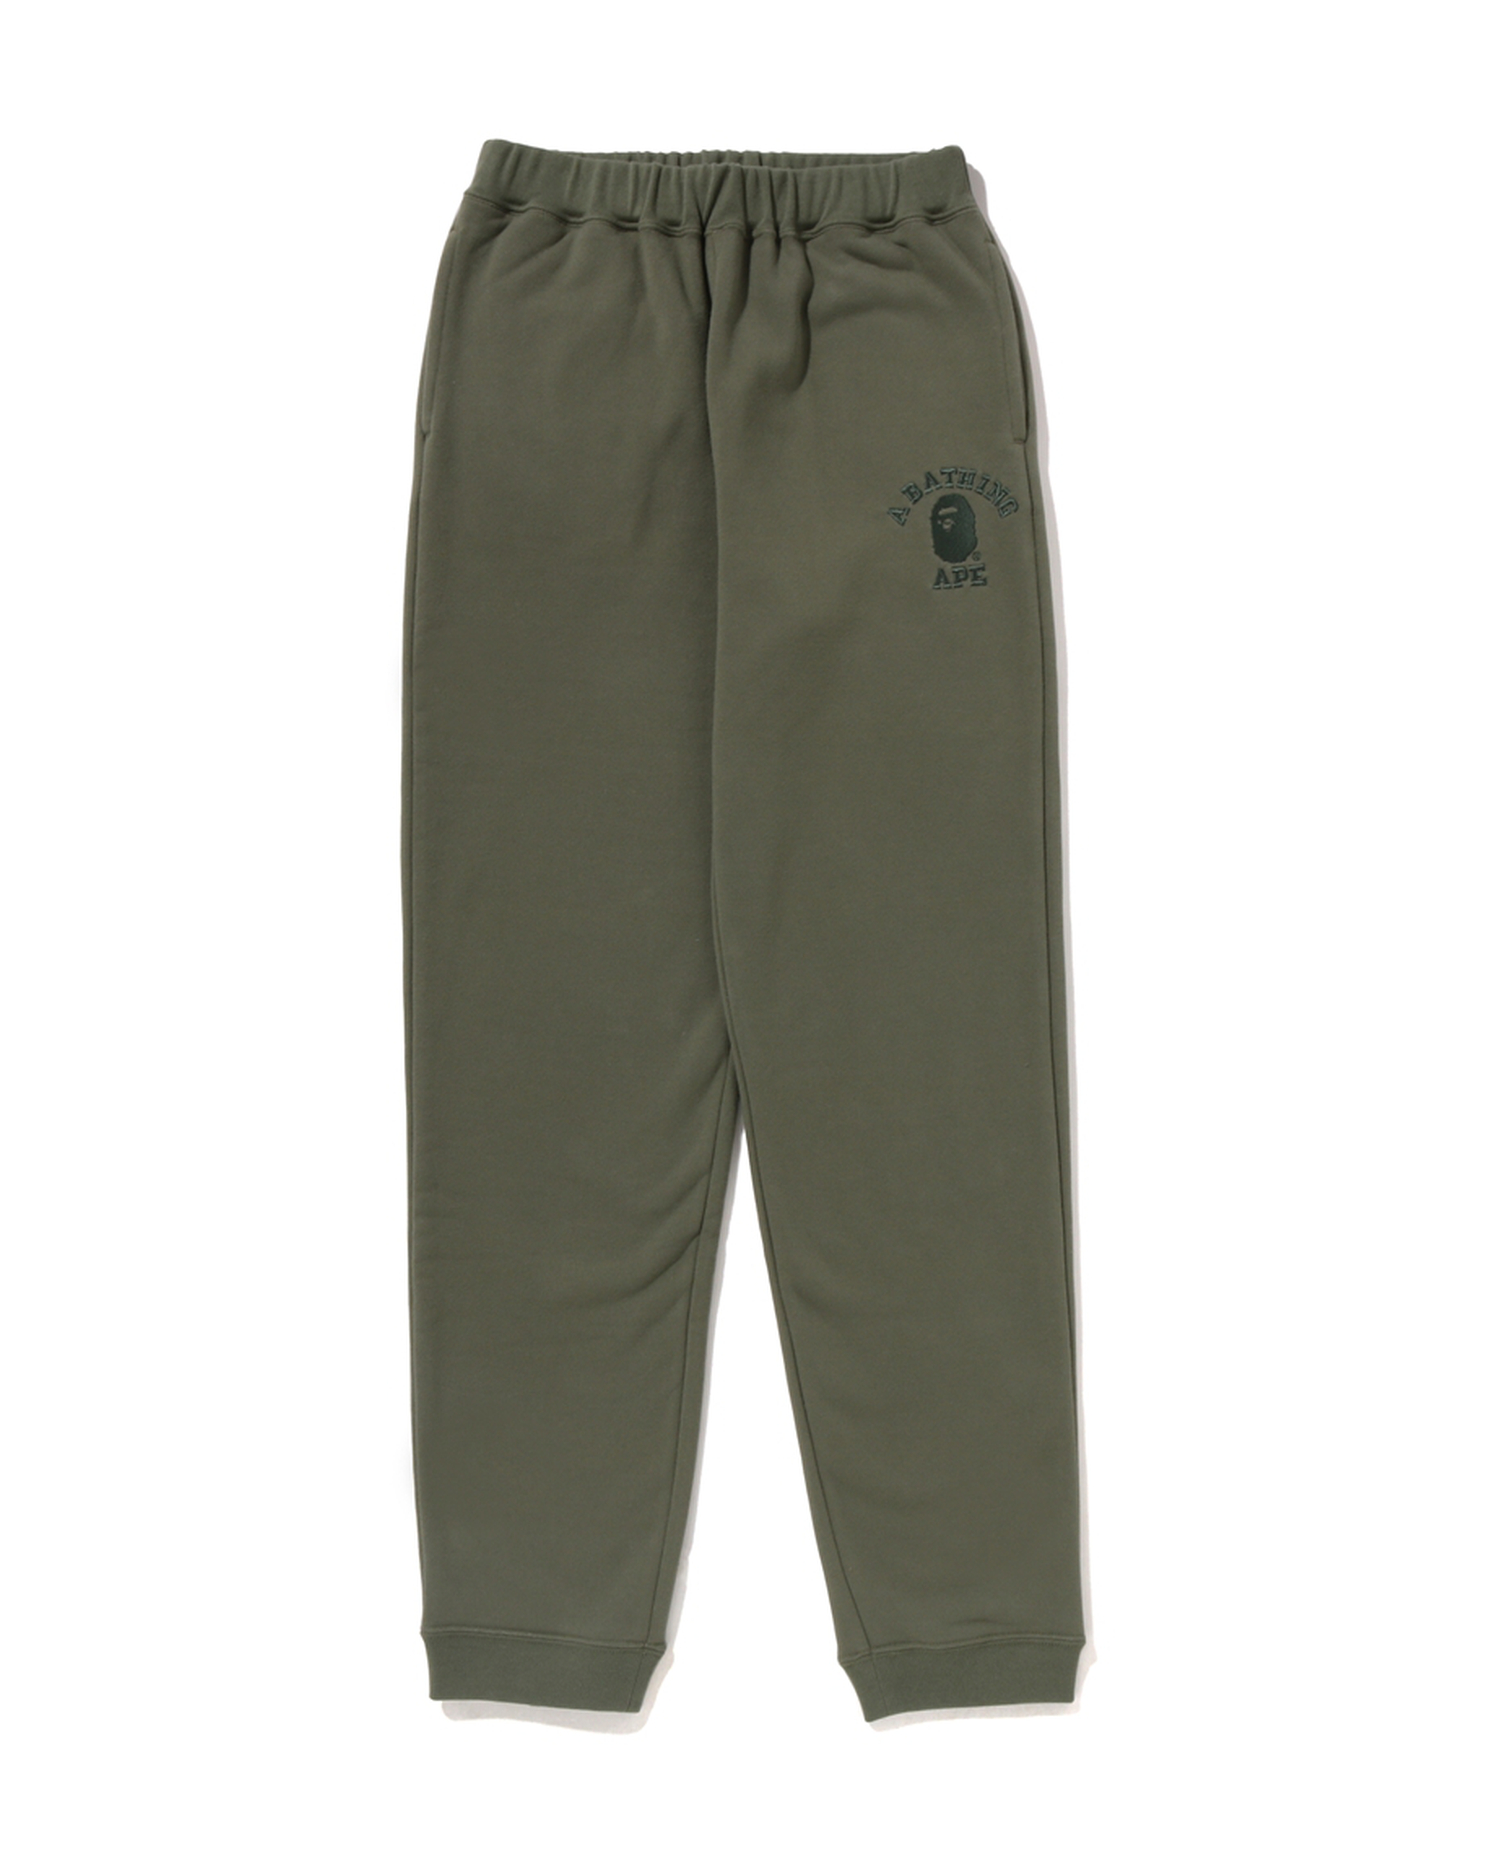 Shop Kids College embroidery sweat pants Jr Online | BAPE